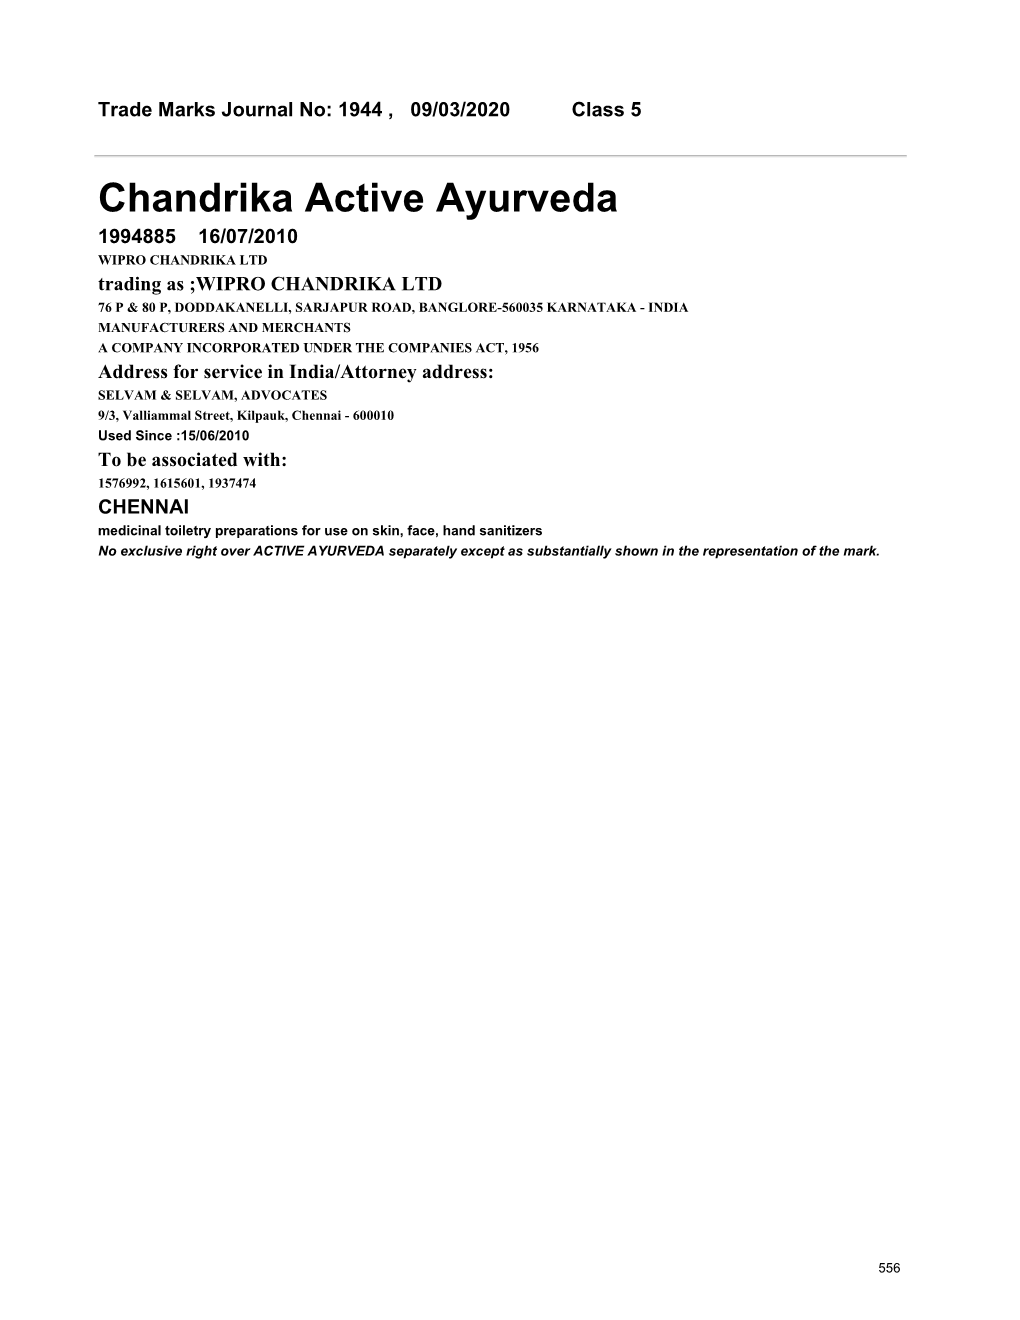 Chandrika Active Ayurveda